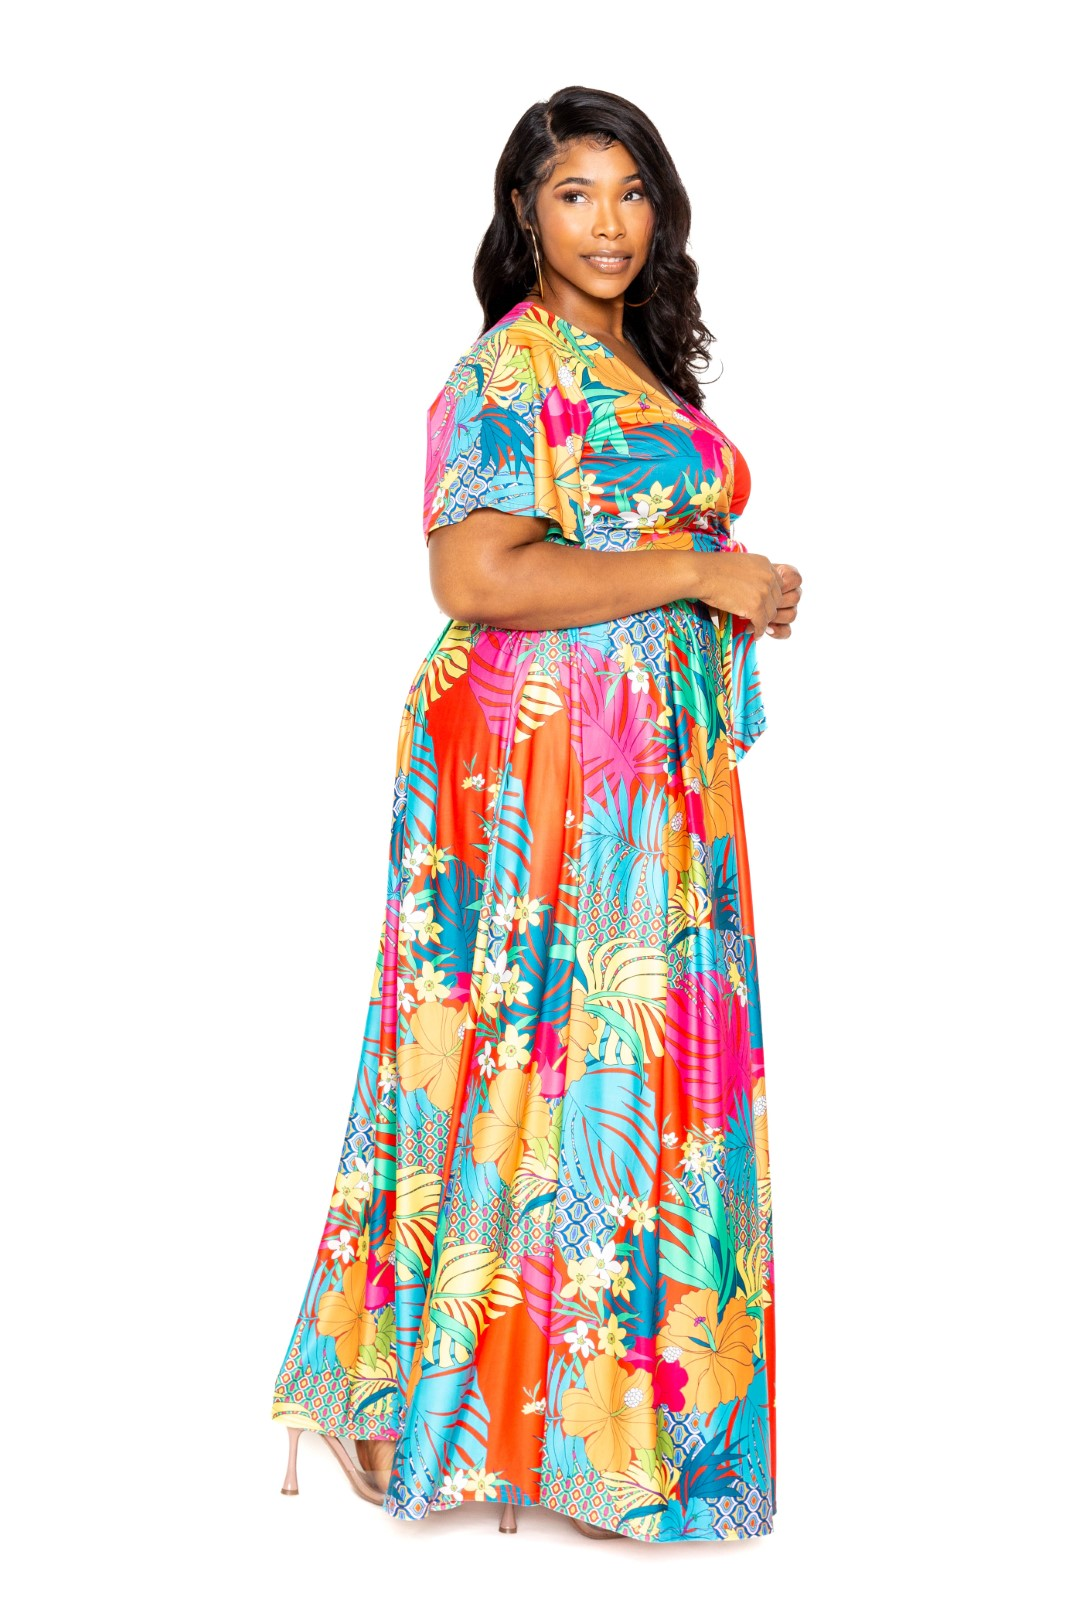 Tropical floral maxi skirt & top set - Tigbul's Fashion